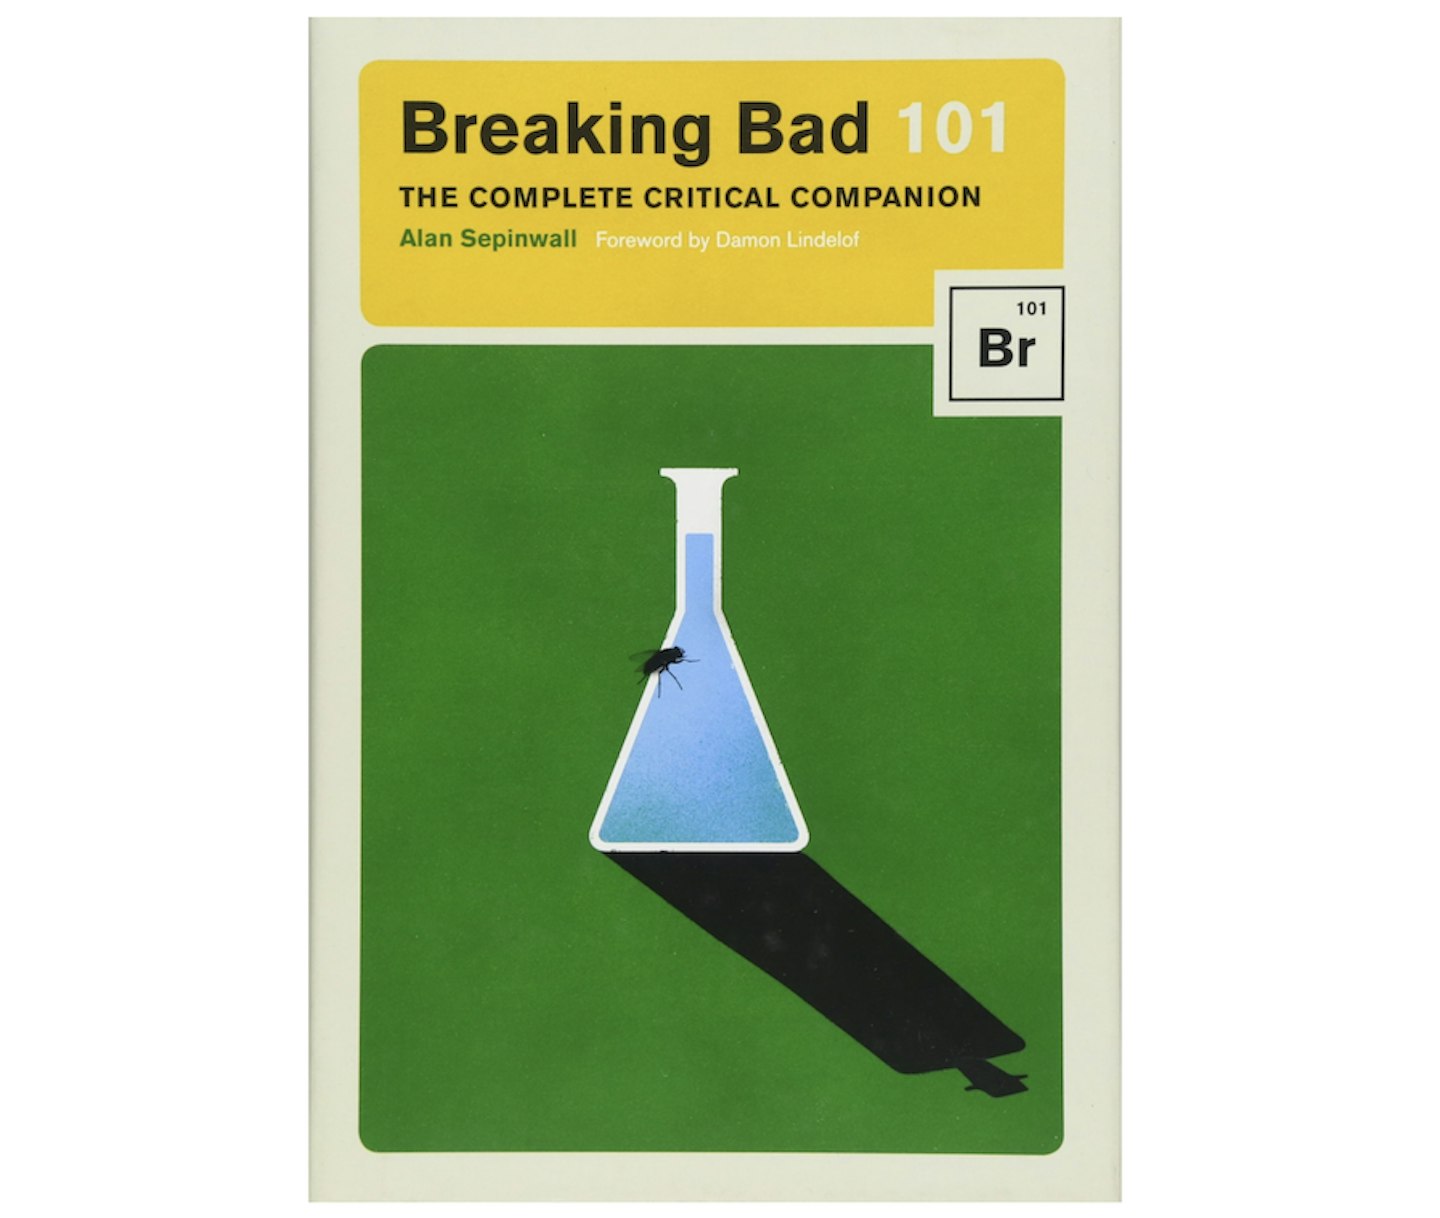 Breaking Bad 101: The Complete Critical Companion, £11.84